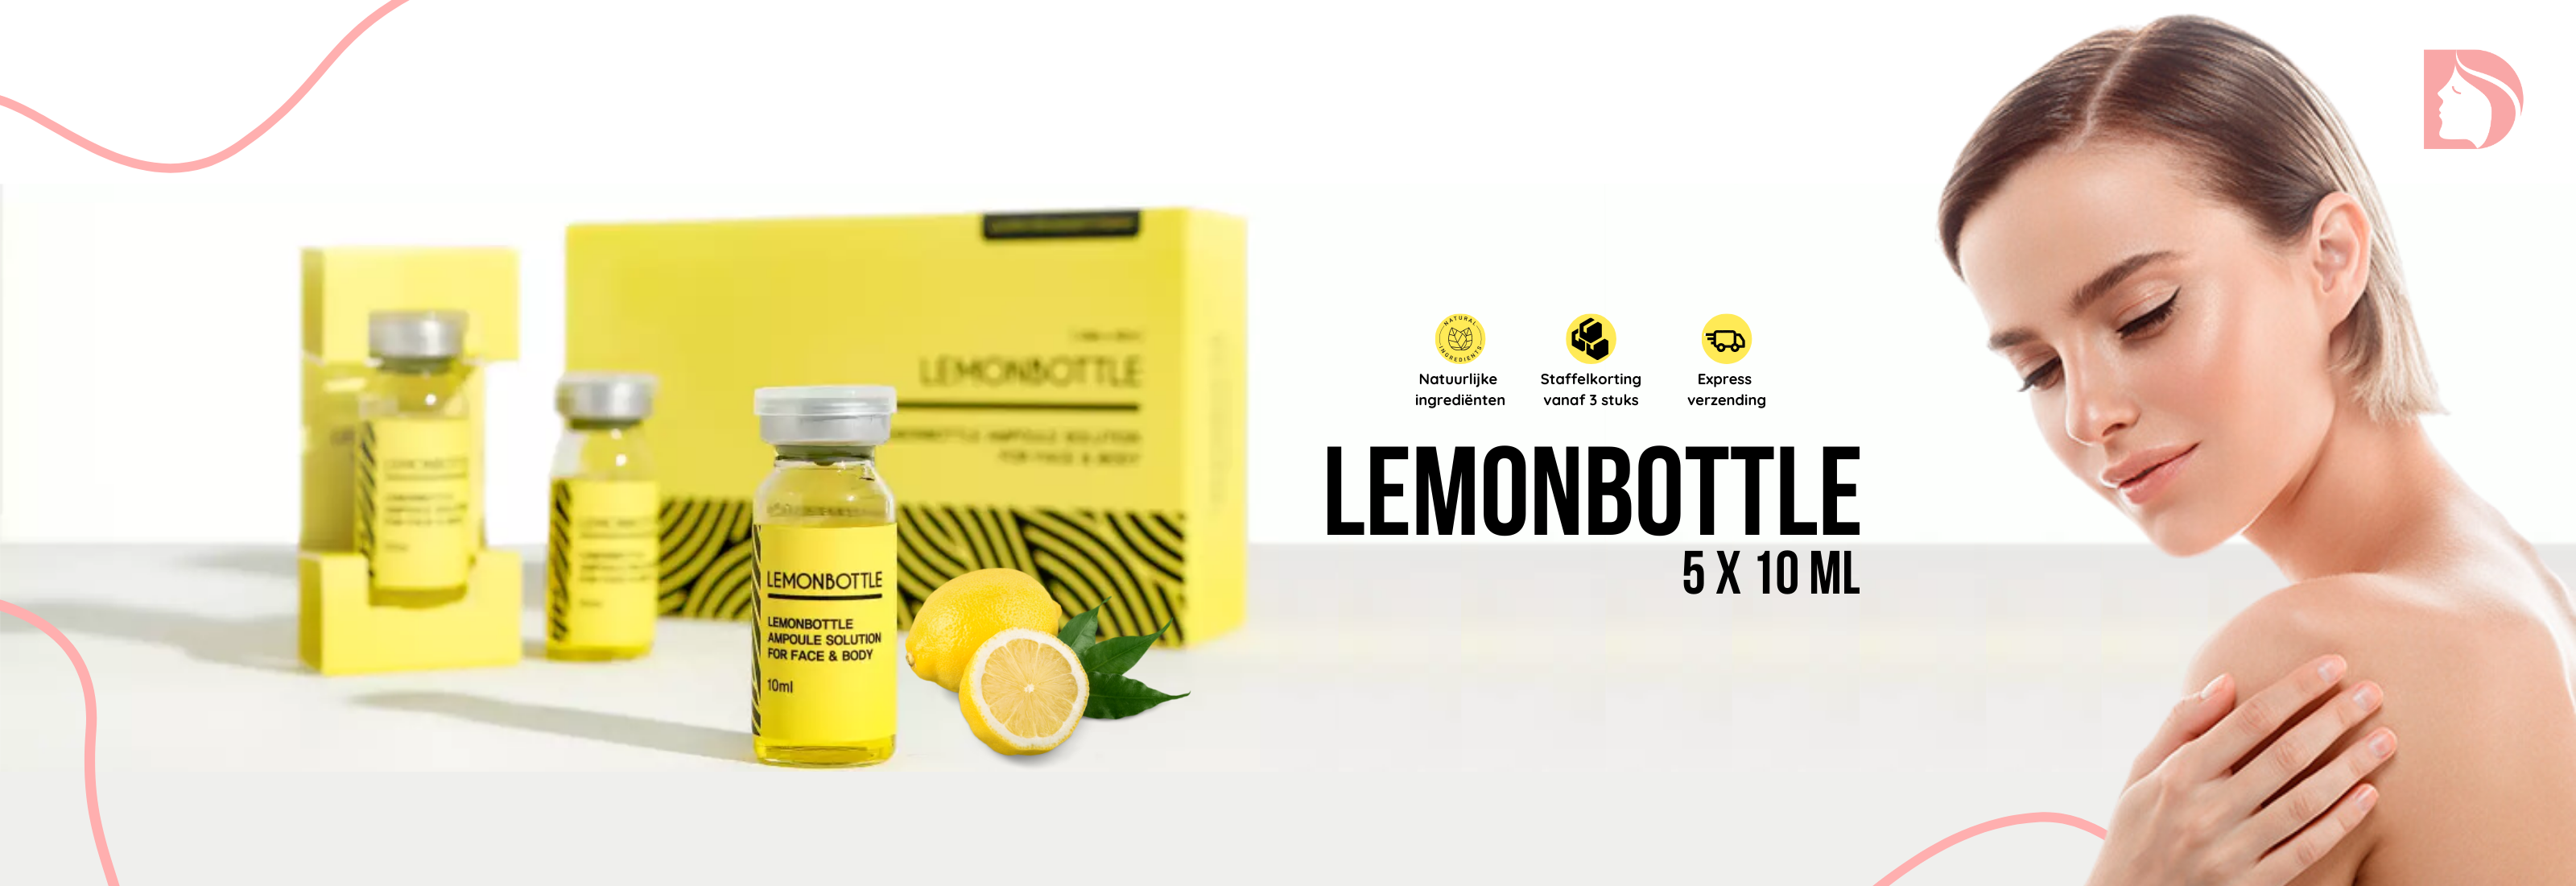 dermal filler Lemon bottle box fat dissolving lipolyse 5x10ml Dermal Filler Sid Medicos